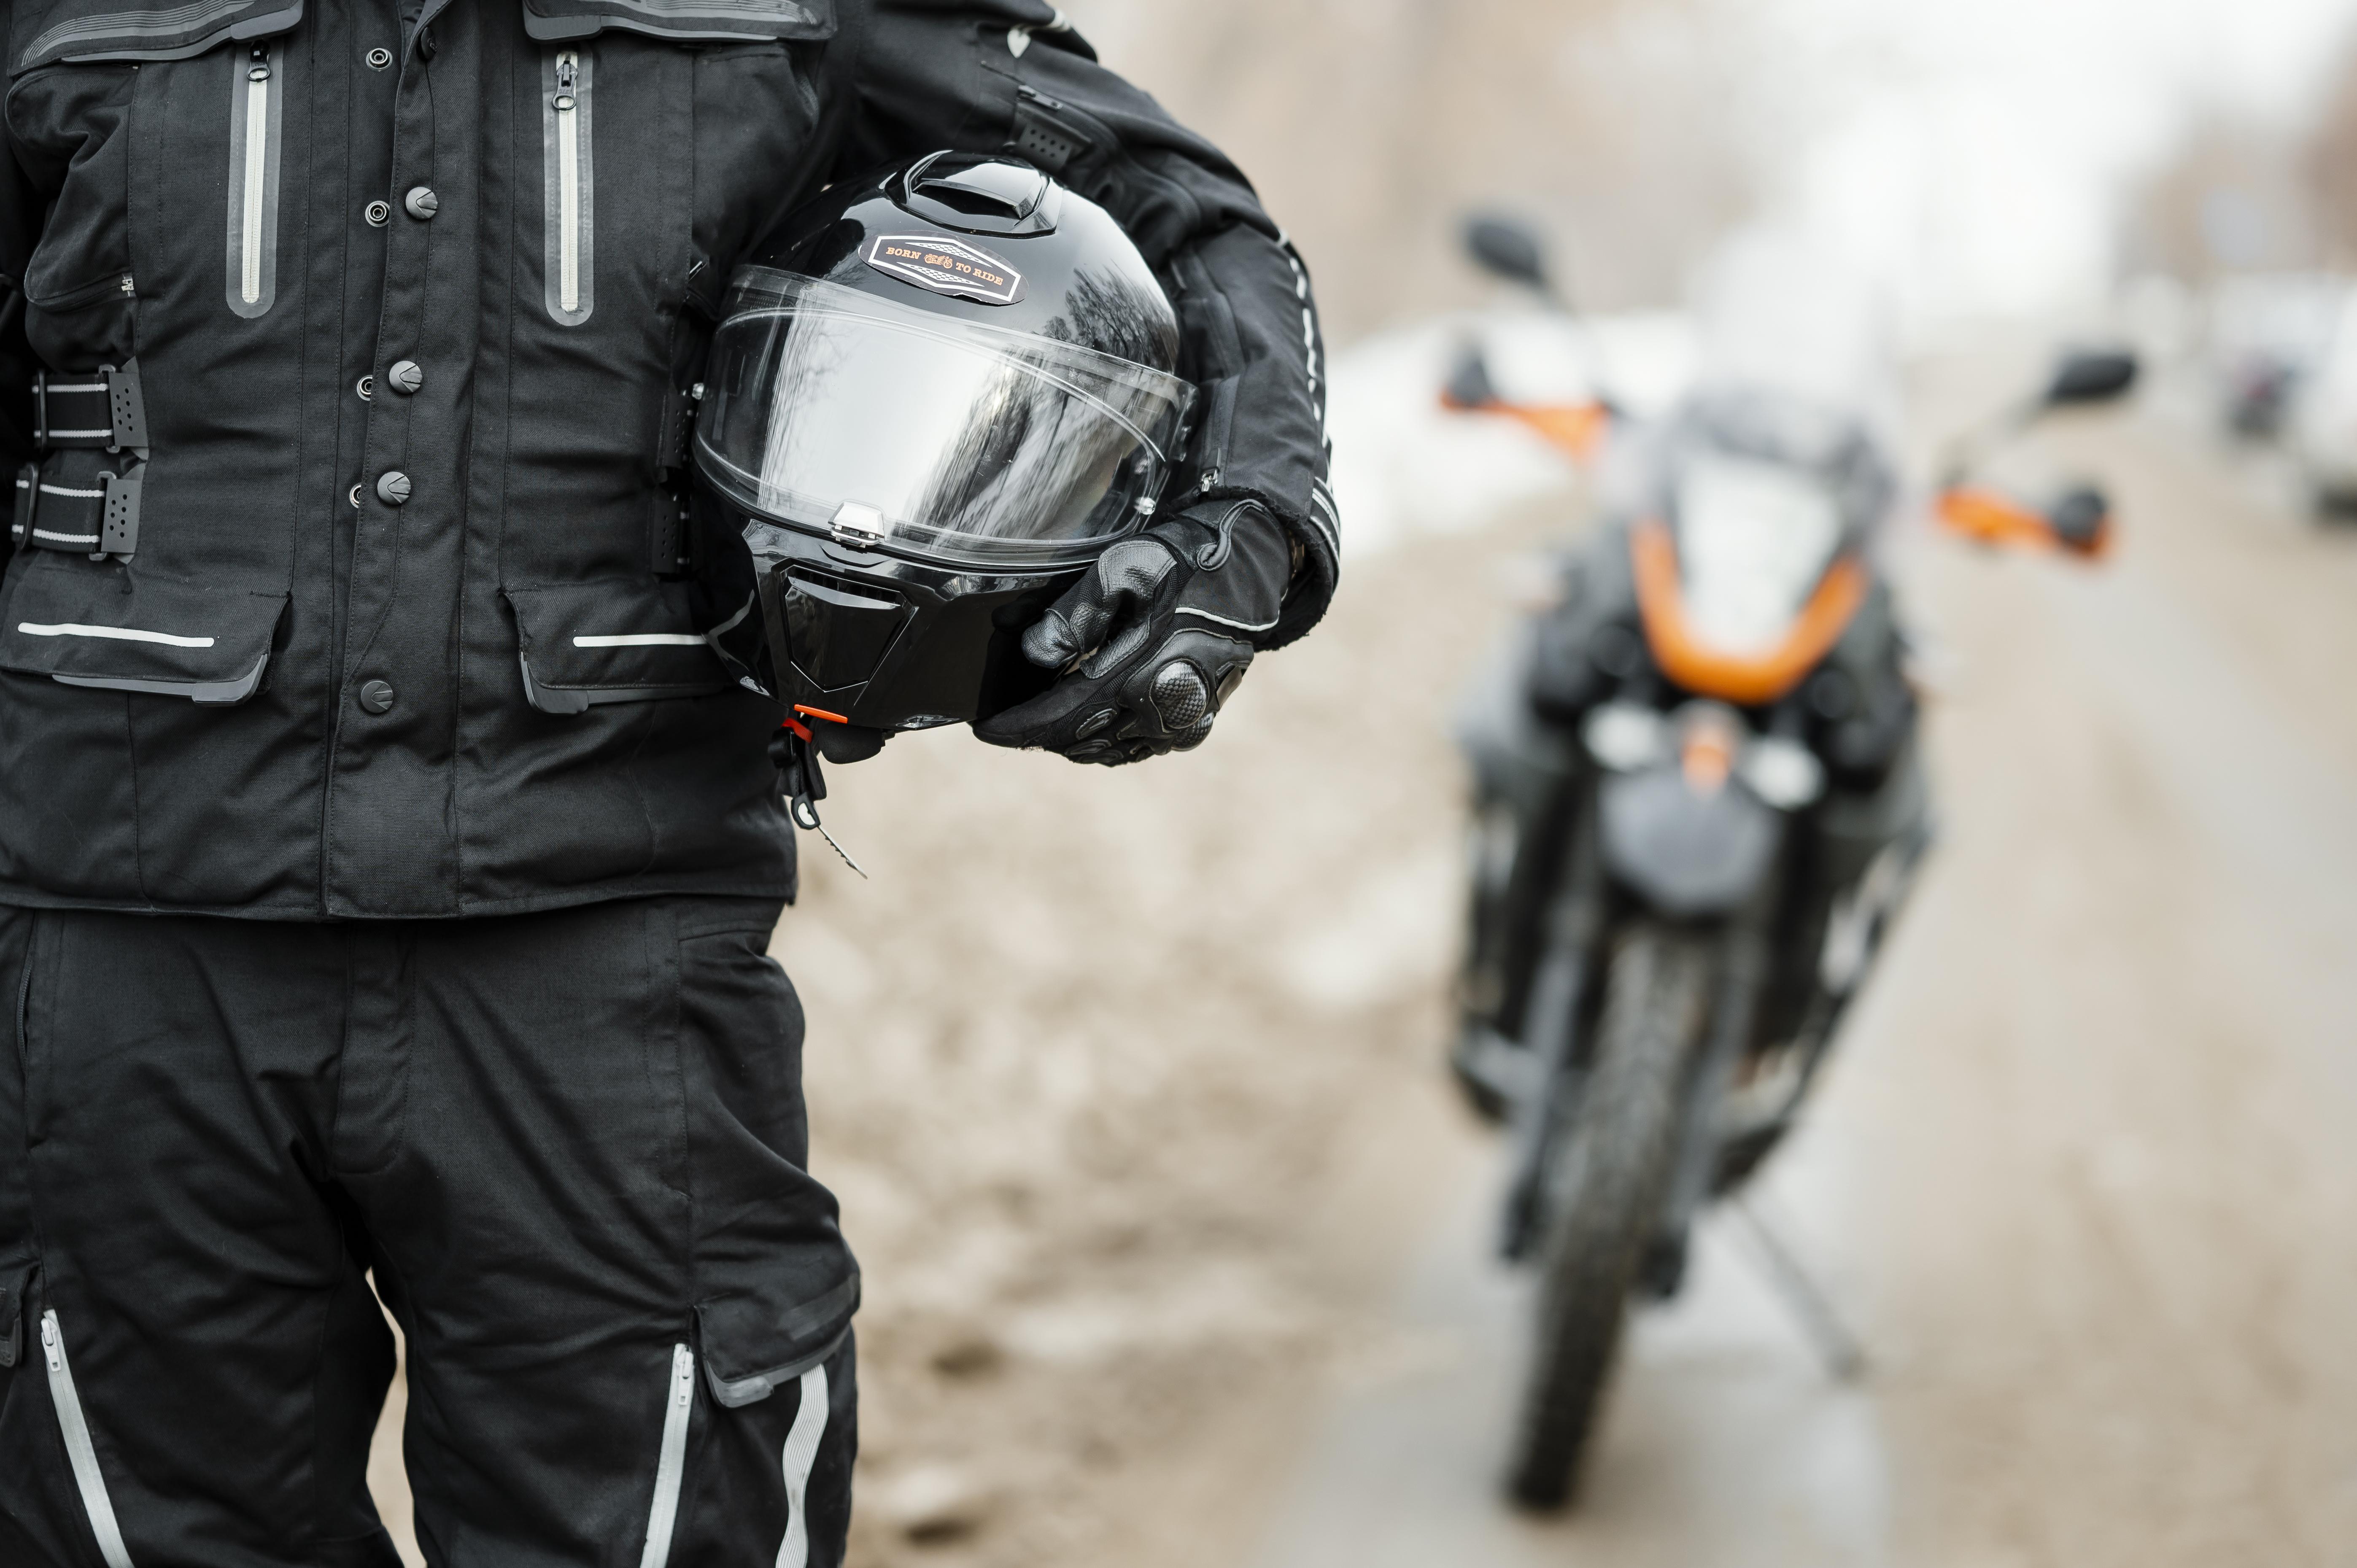 men-riding-motorcycle-winter-day